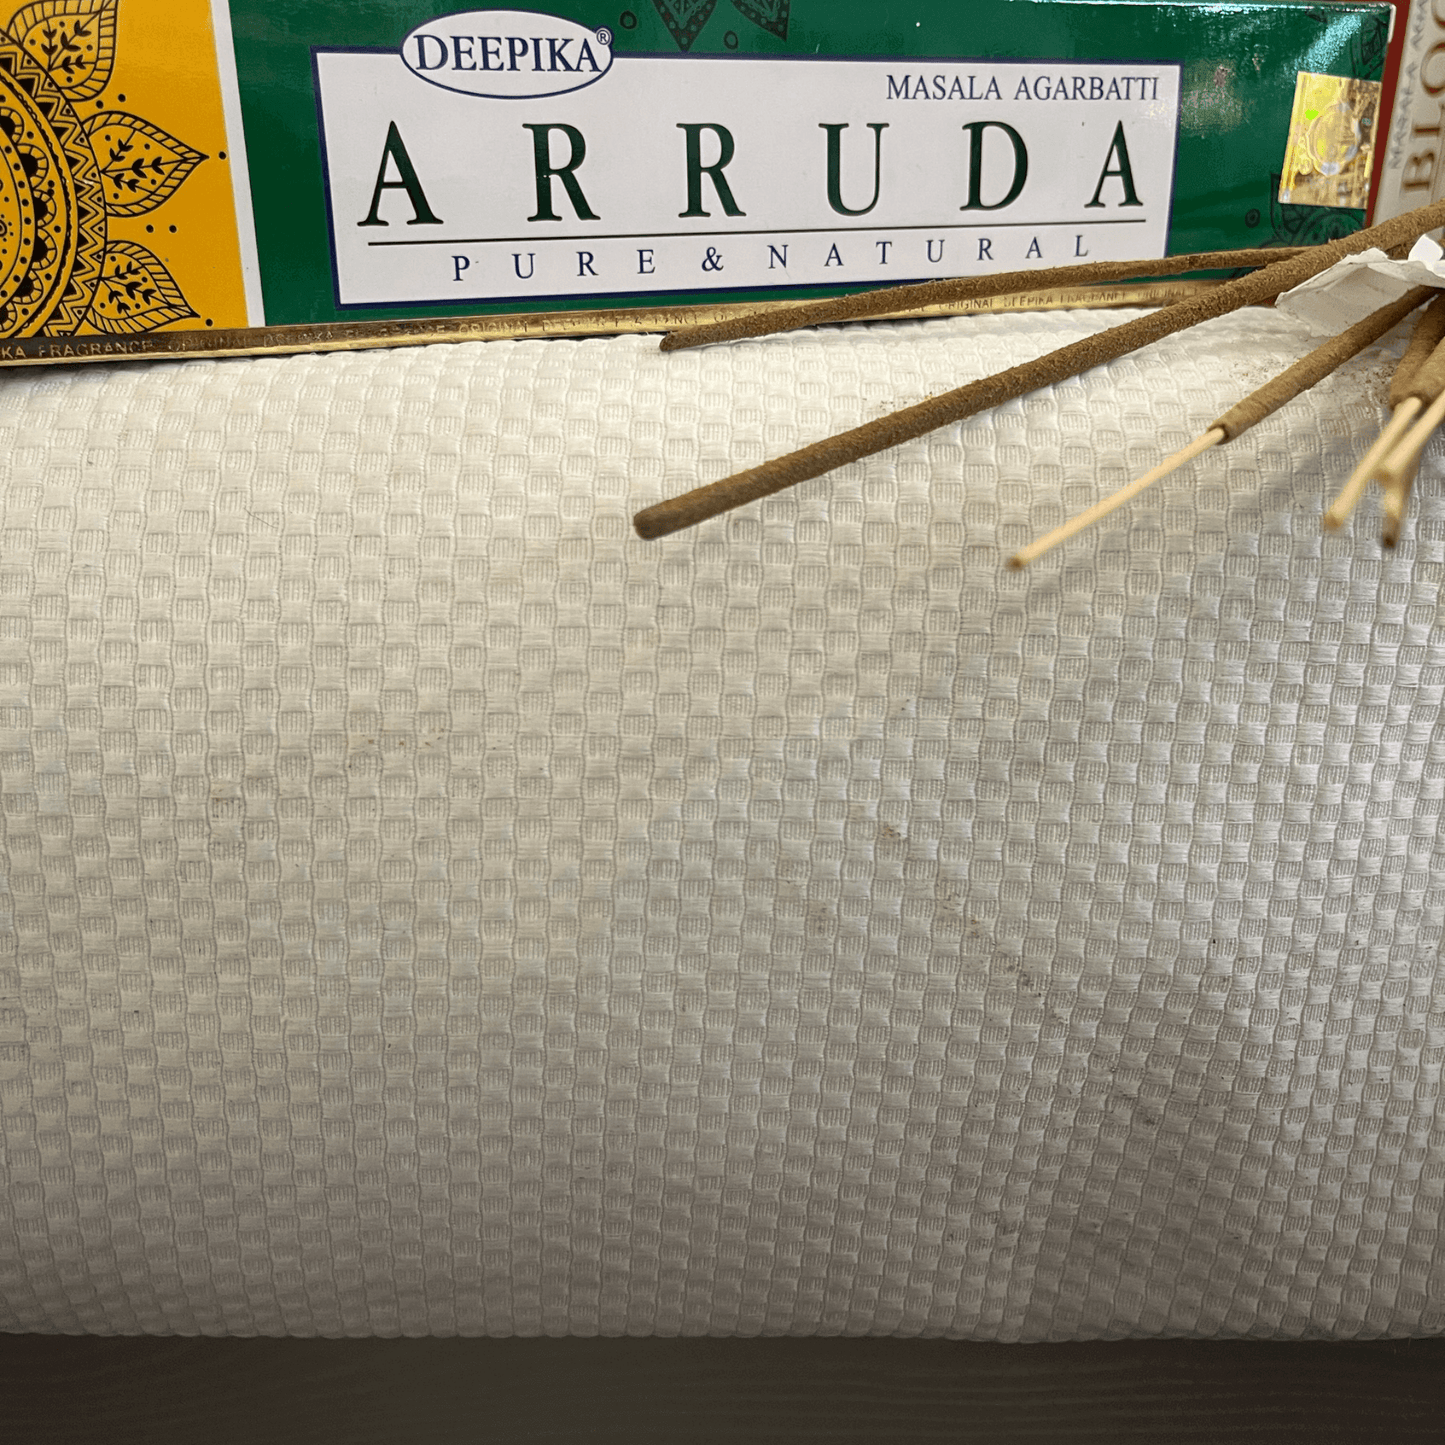 ARRUDA-INCENSE STICKDeepika fragrance bring to you a stylish handy packaged masala agarbatti